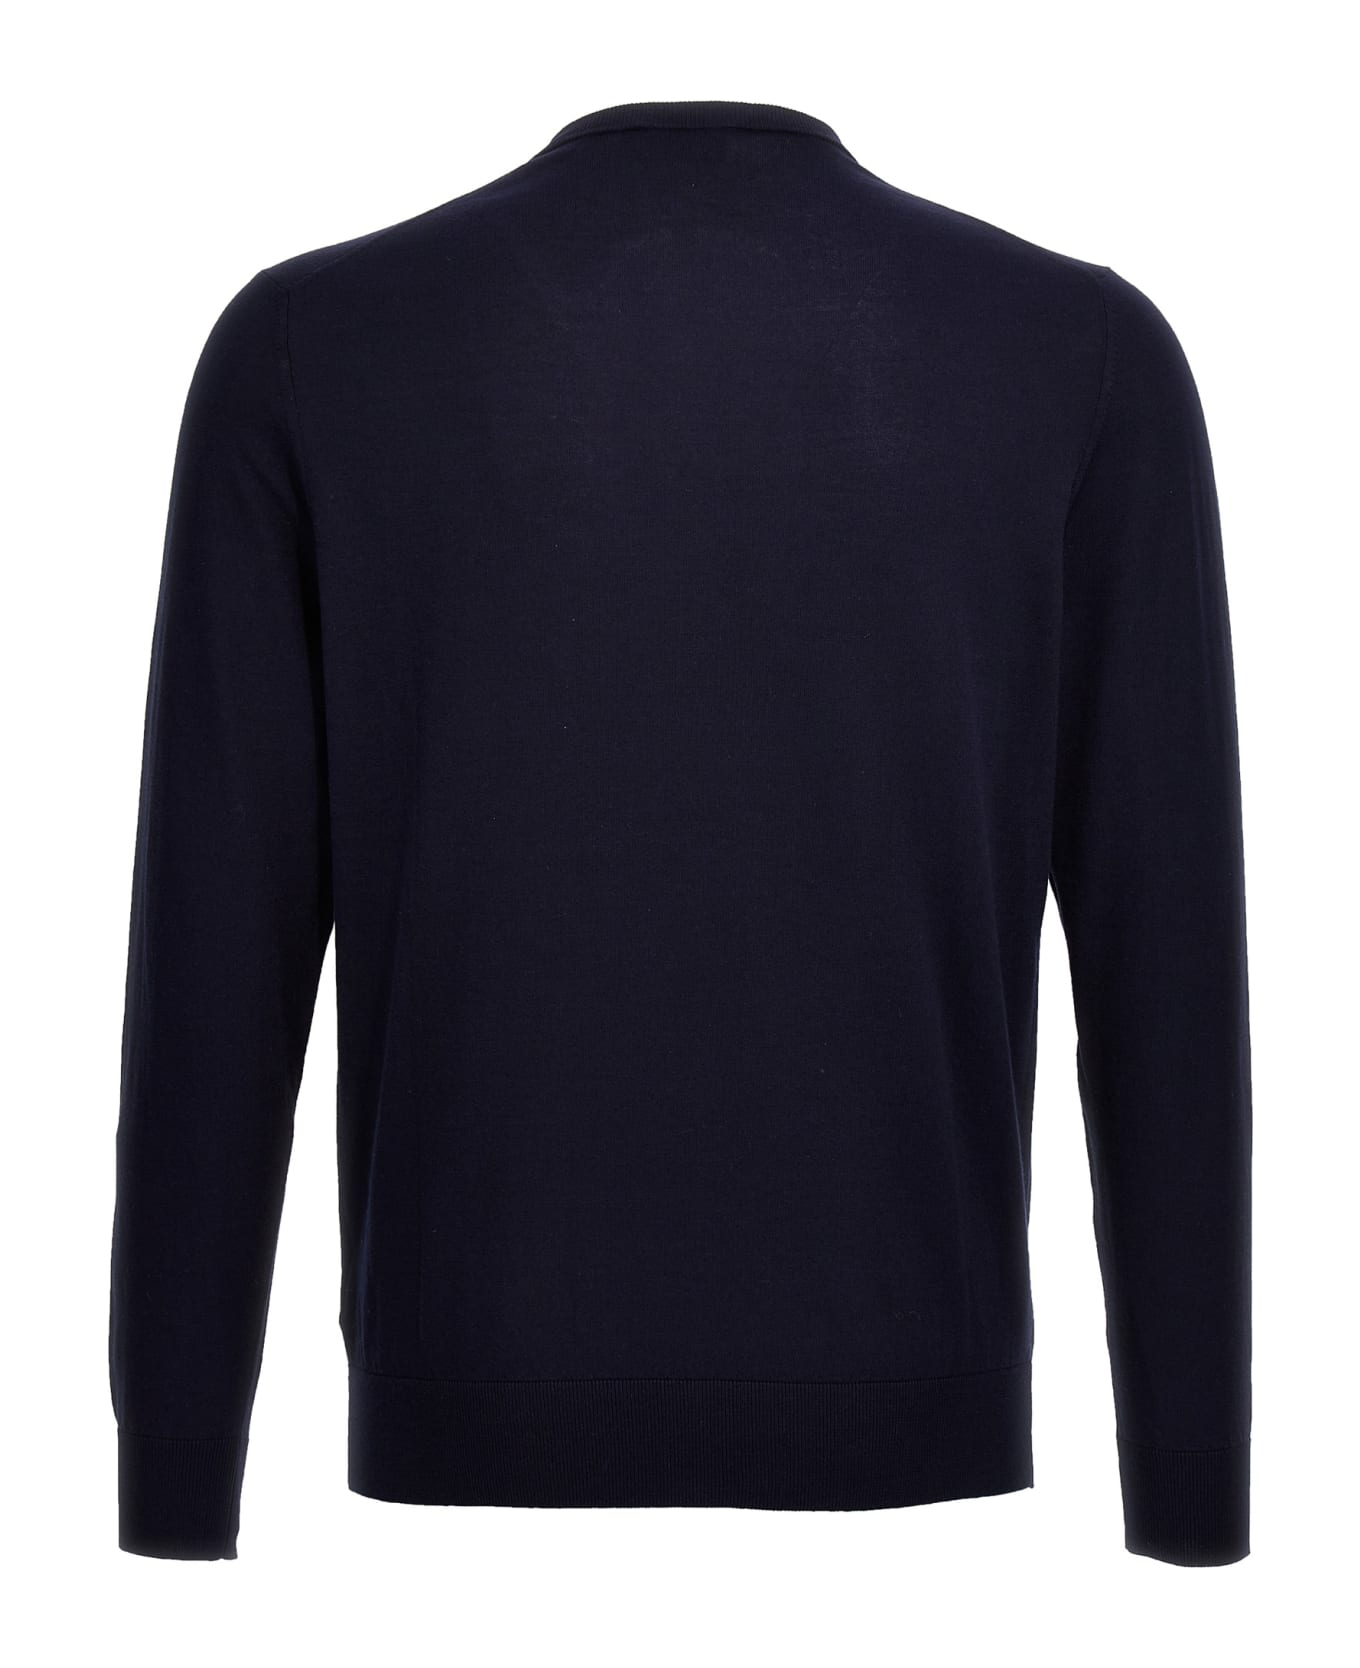 Ballantyne Cotton Sweater - Blue